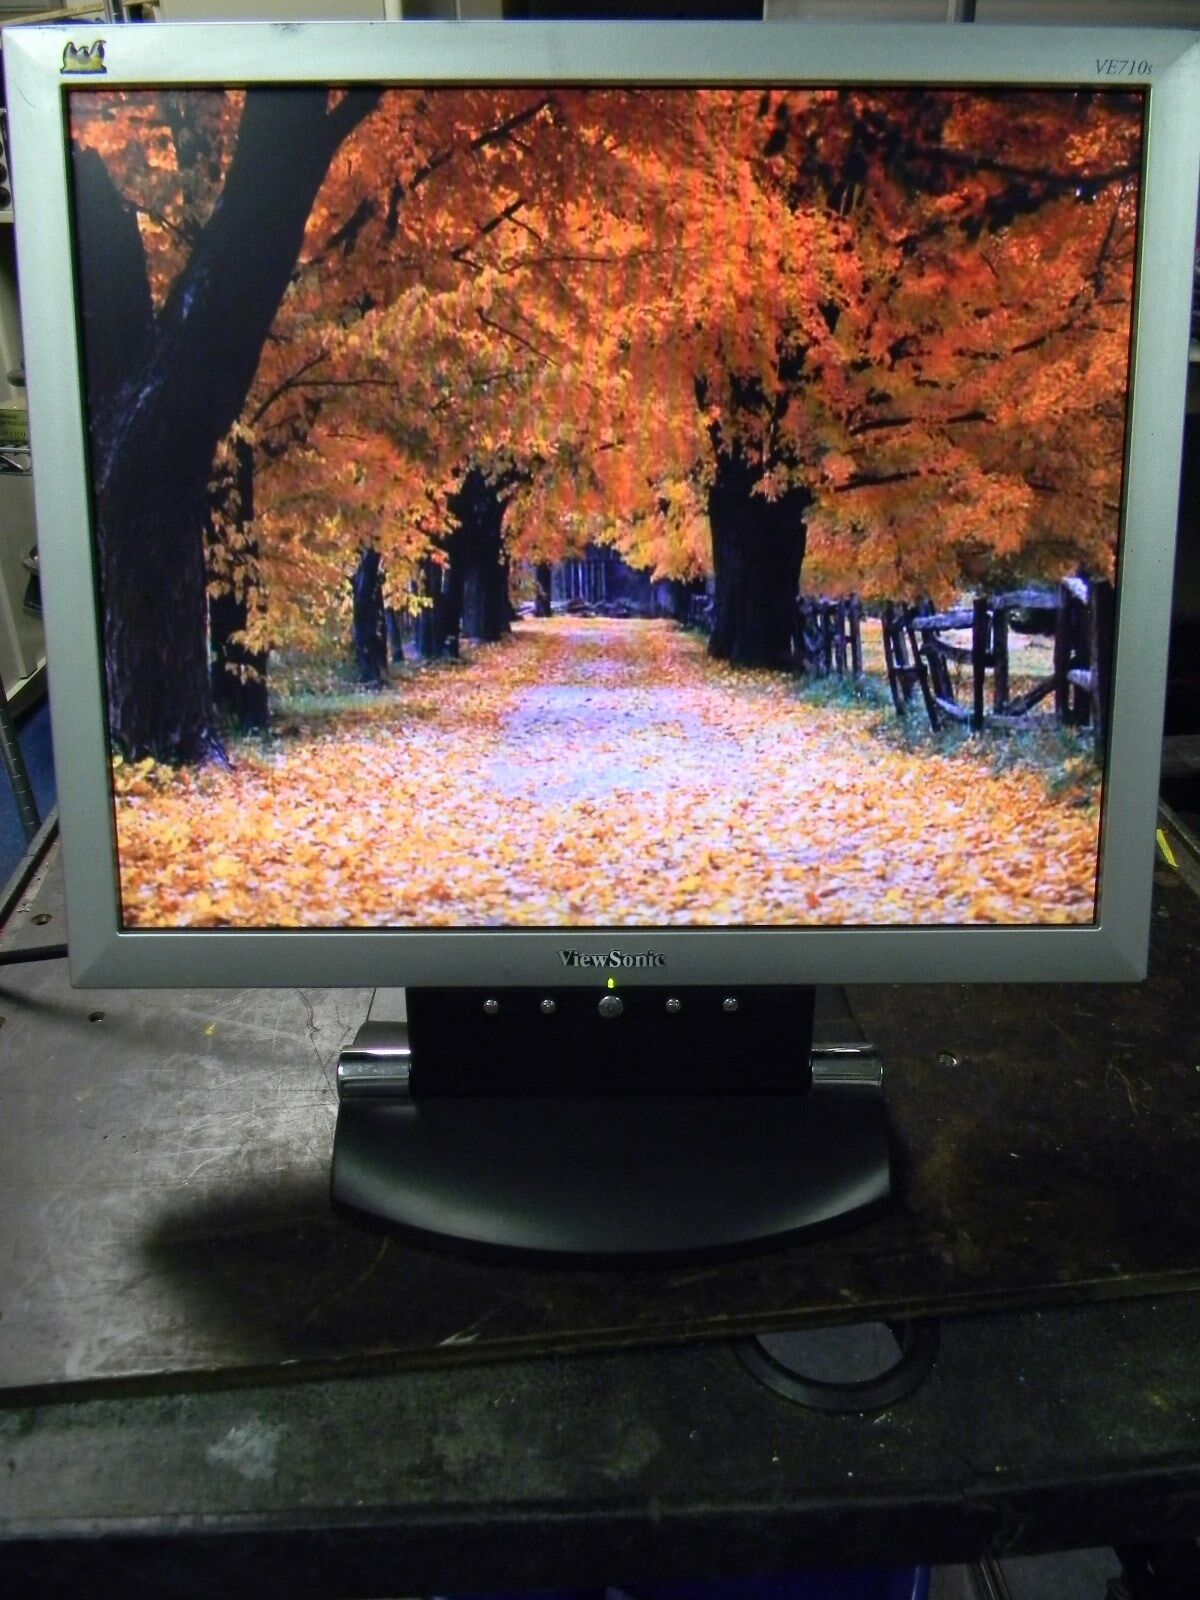 Viewsonic VE710s 17” LCD Flat Panel VGA Computer Monitor